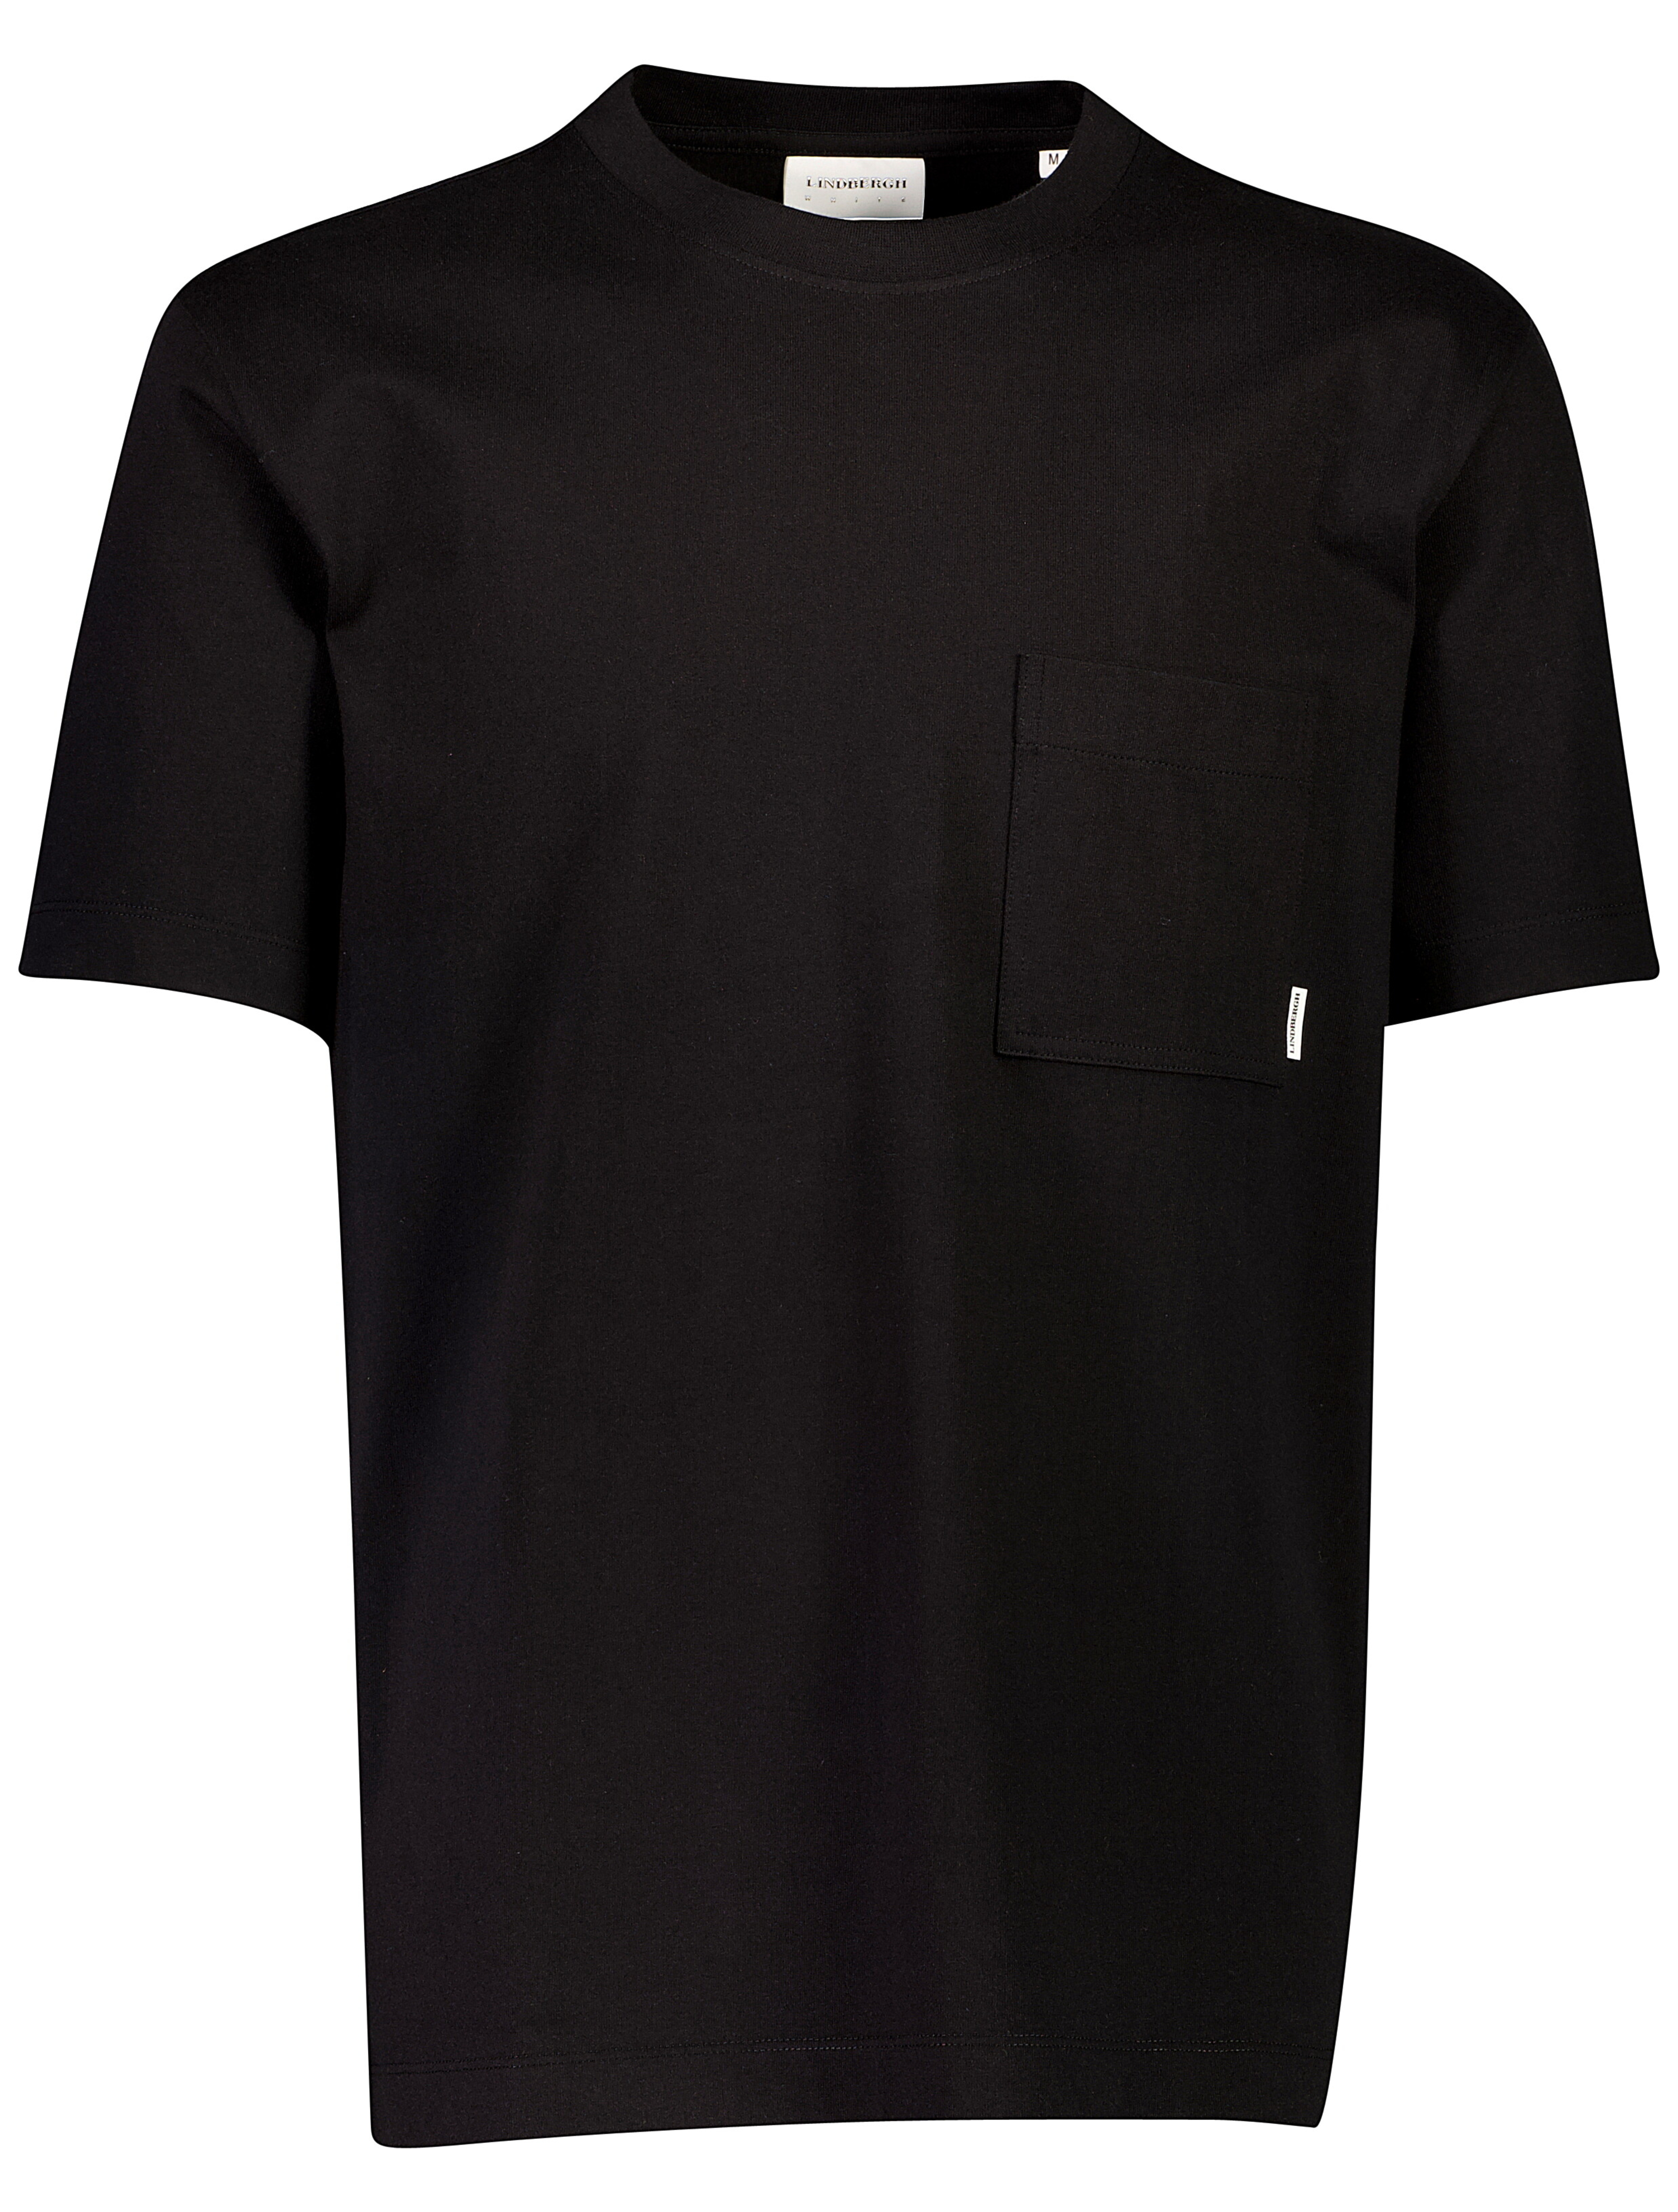 Lindbergh T-shirt sort / black